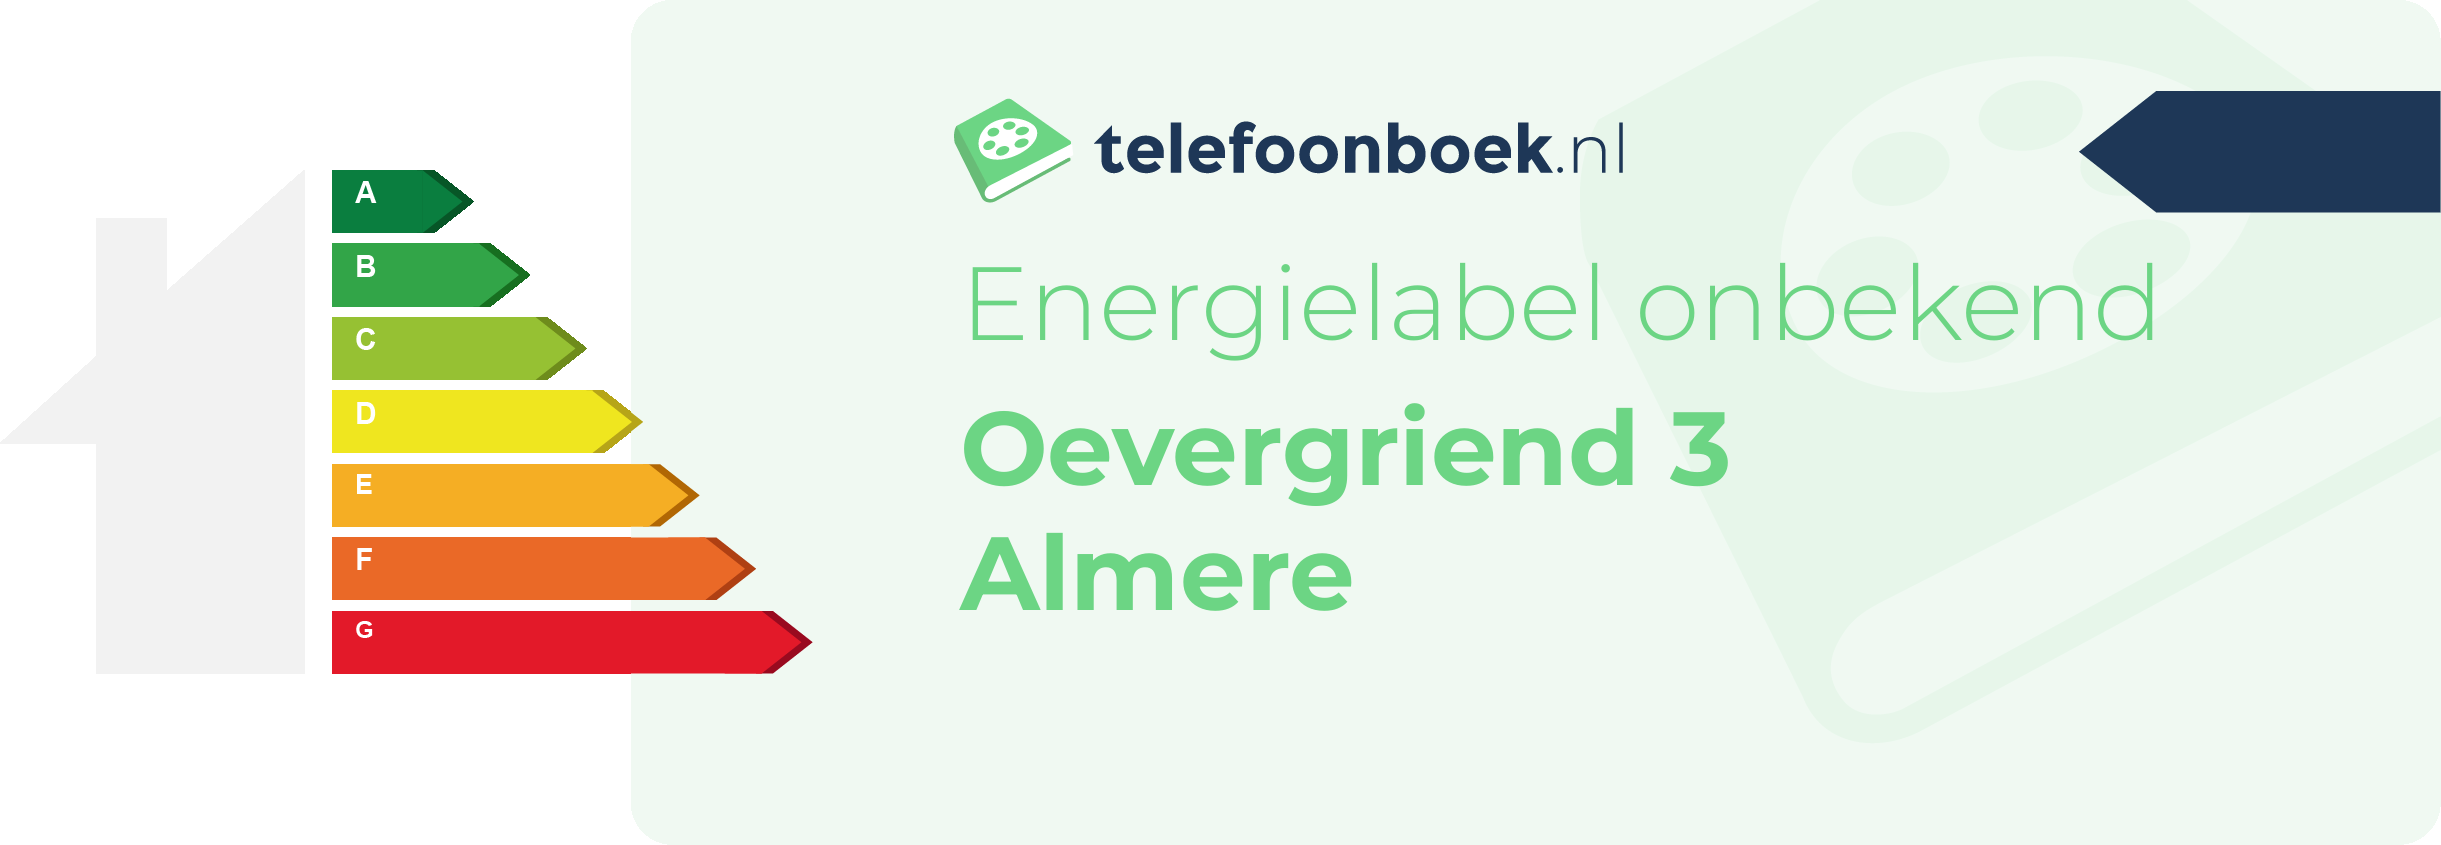 Energielabel Oevergriend 3 Almere